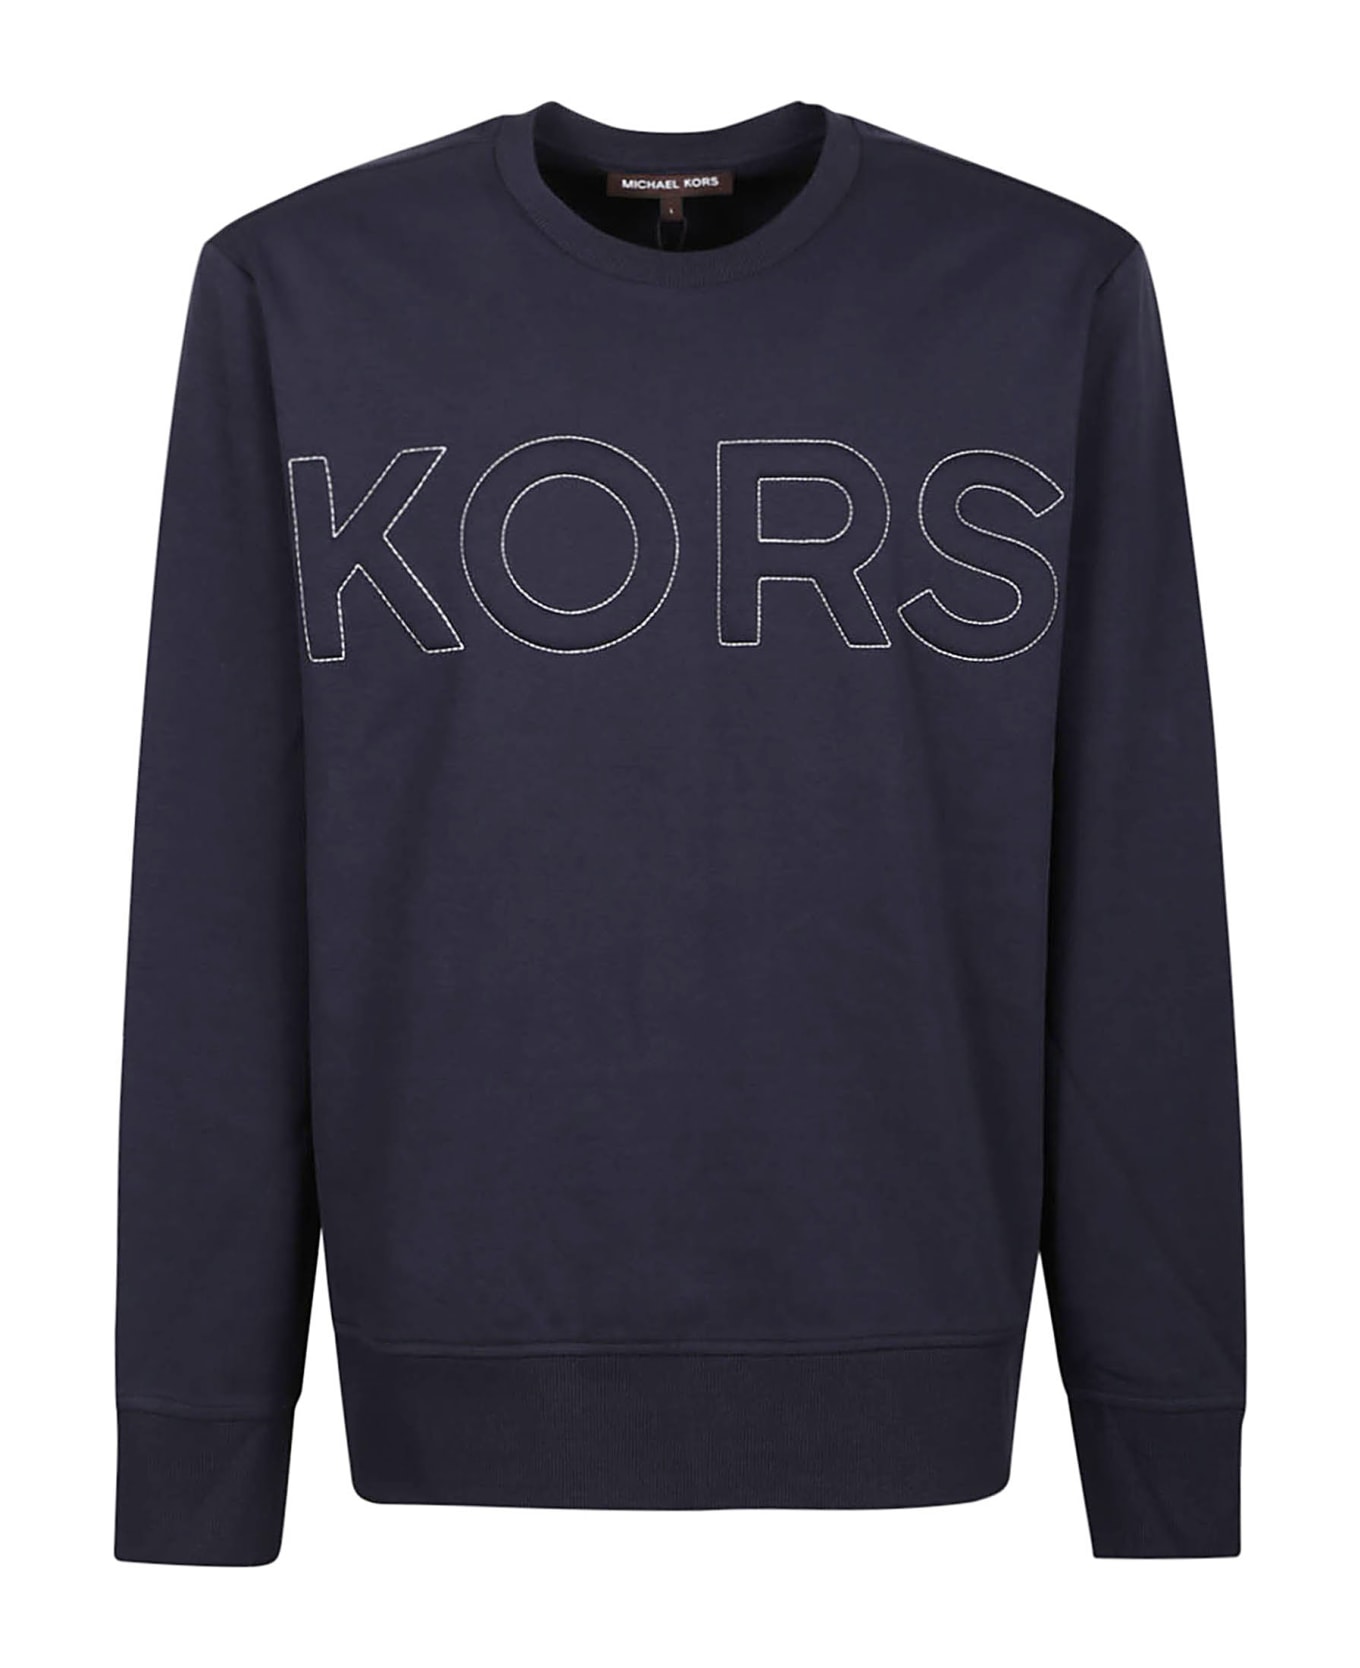 Michael Kors Quilted Sweatshirt - Midnight